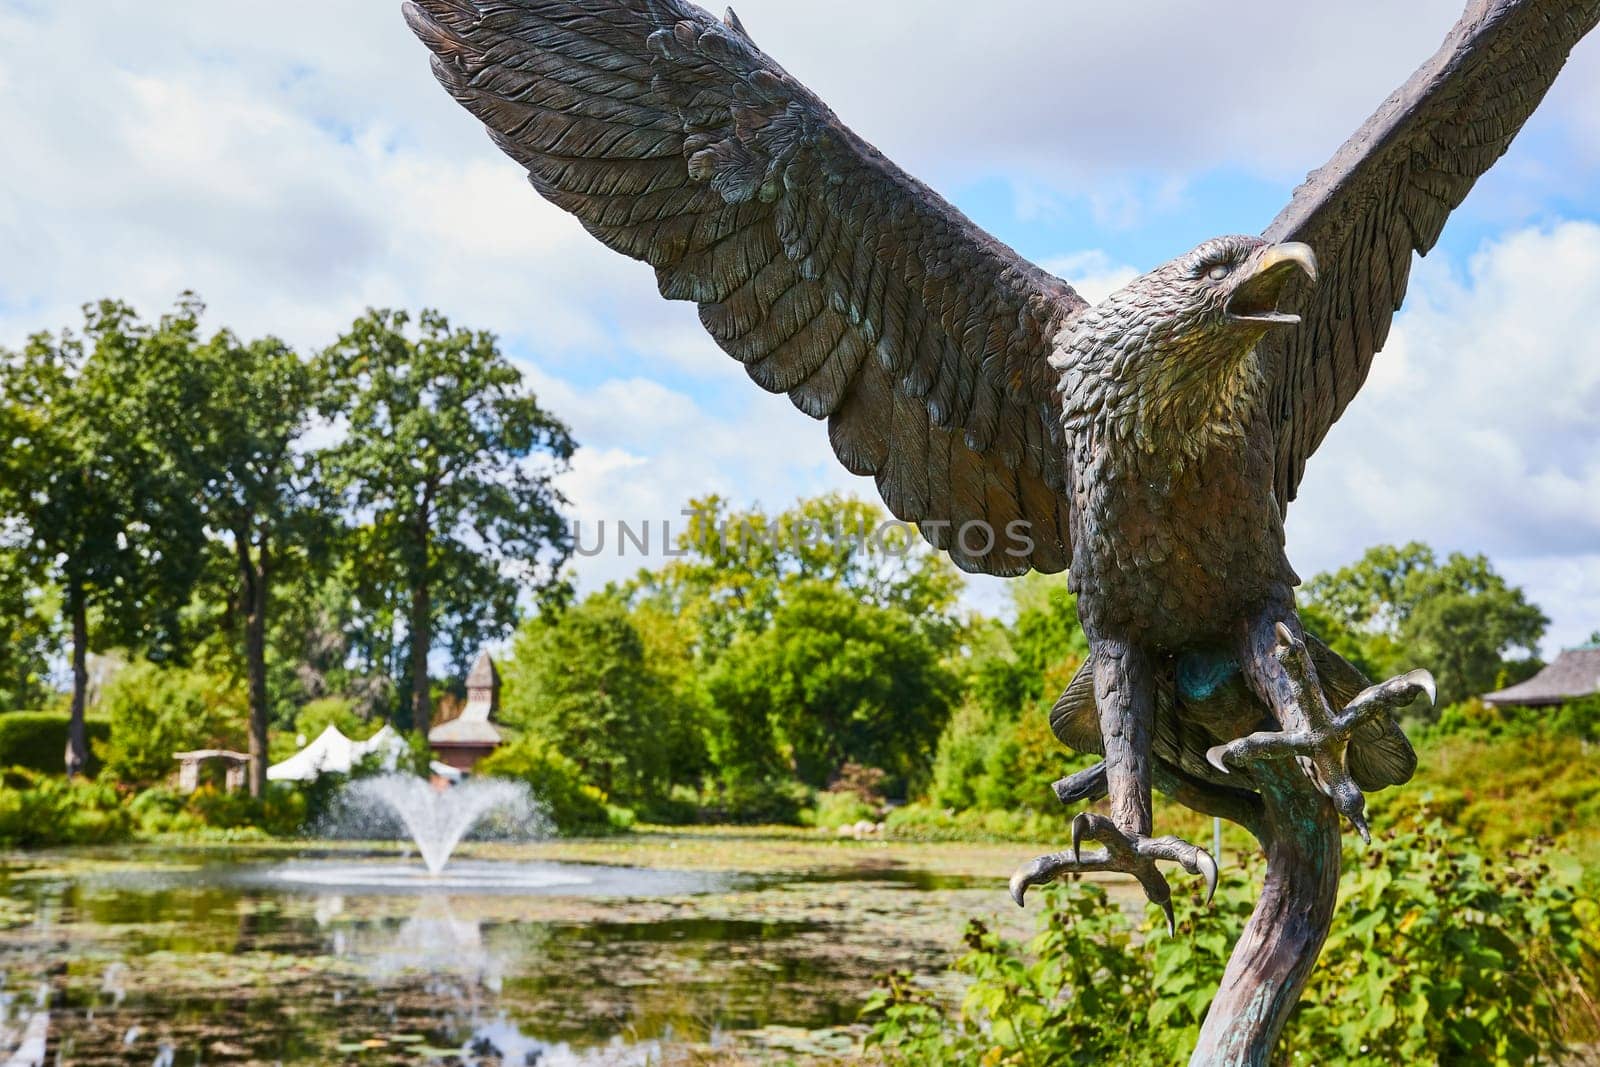 Bronze eagle sculpture takes flight in tranquil Botanic Gardens, Elkhart, Indiana, symbolizing freedom amid serene nature, 2023